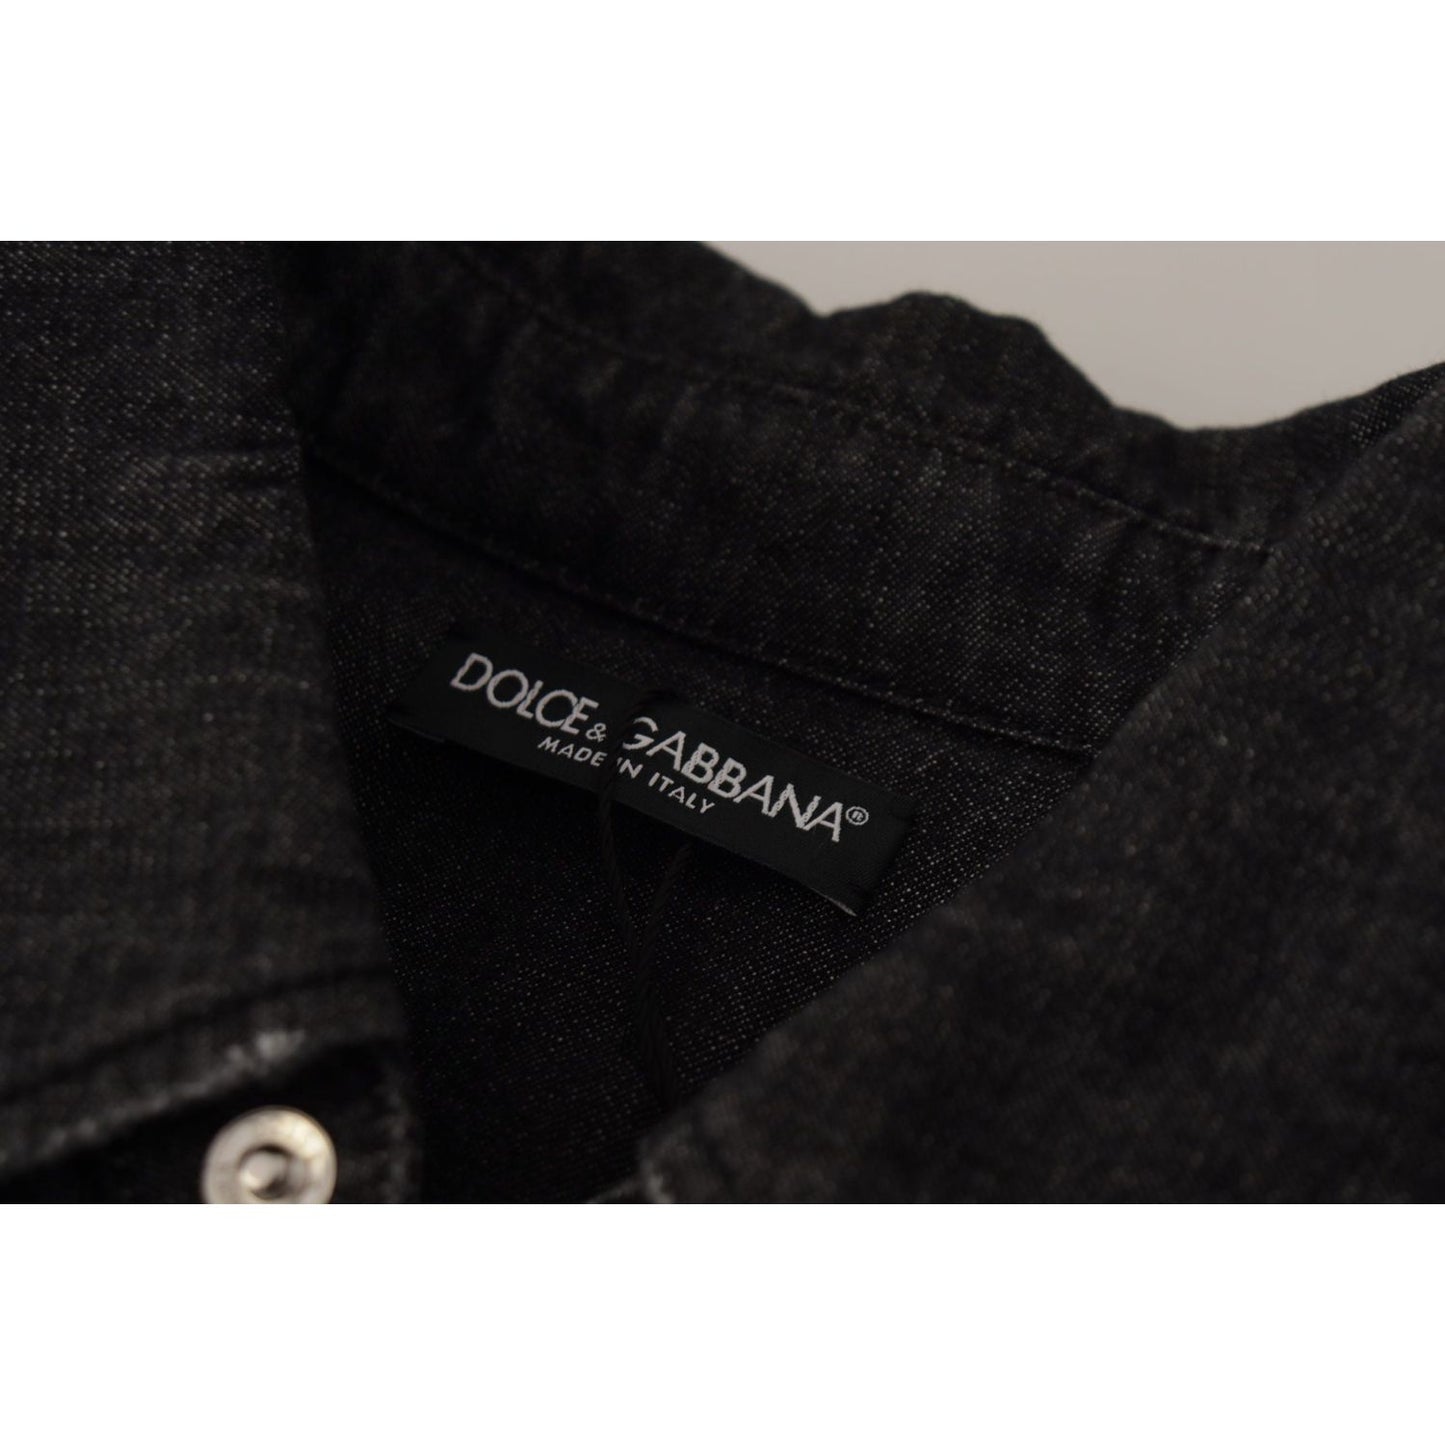 Dolce & Gabbana Elegant Grey Cotton Blend Casual Shirt gray-cotton-stretch-button-down-denim-shirt